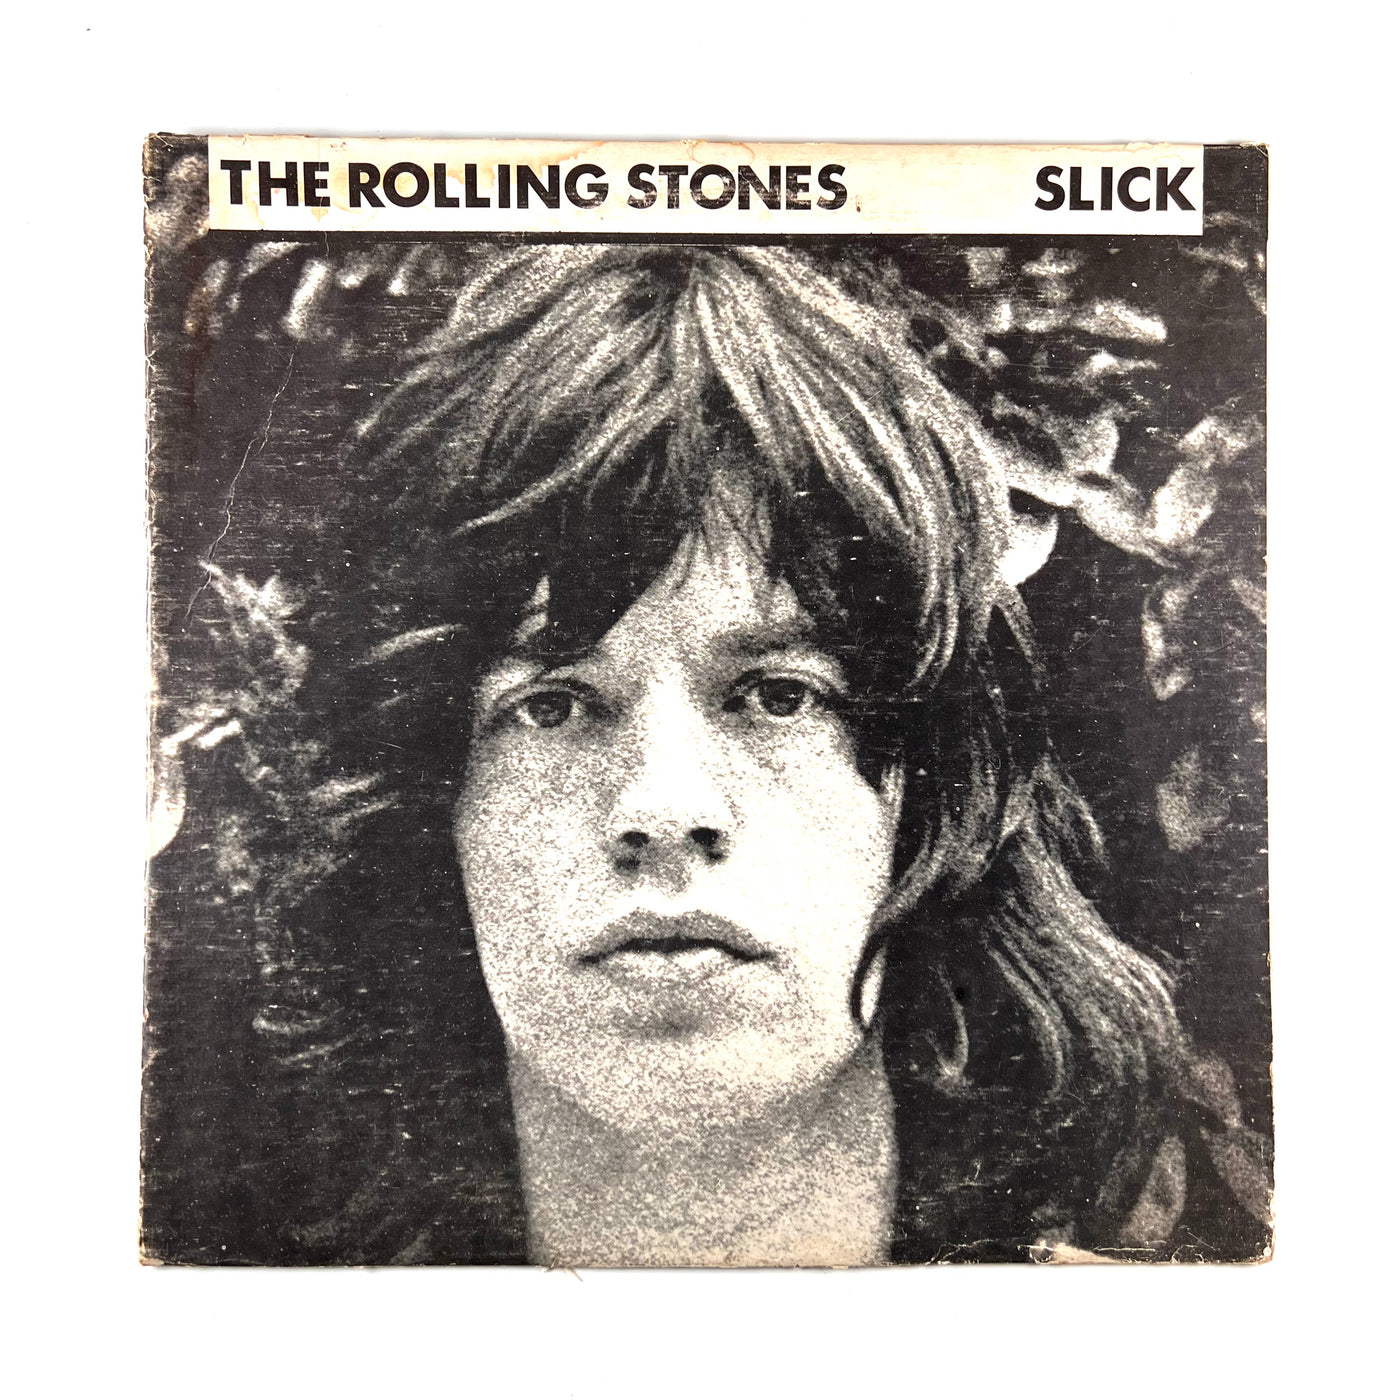 The Rolling Stones - Slick